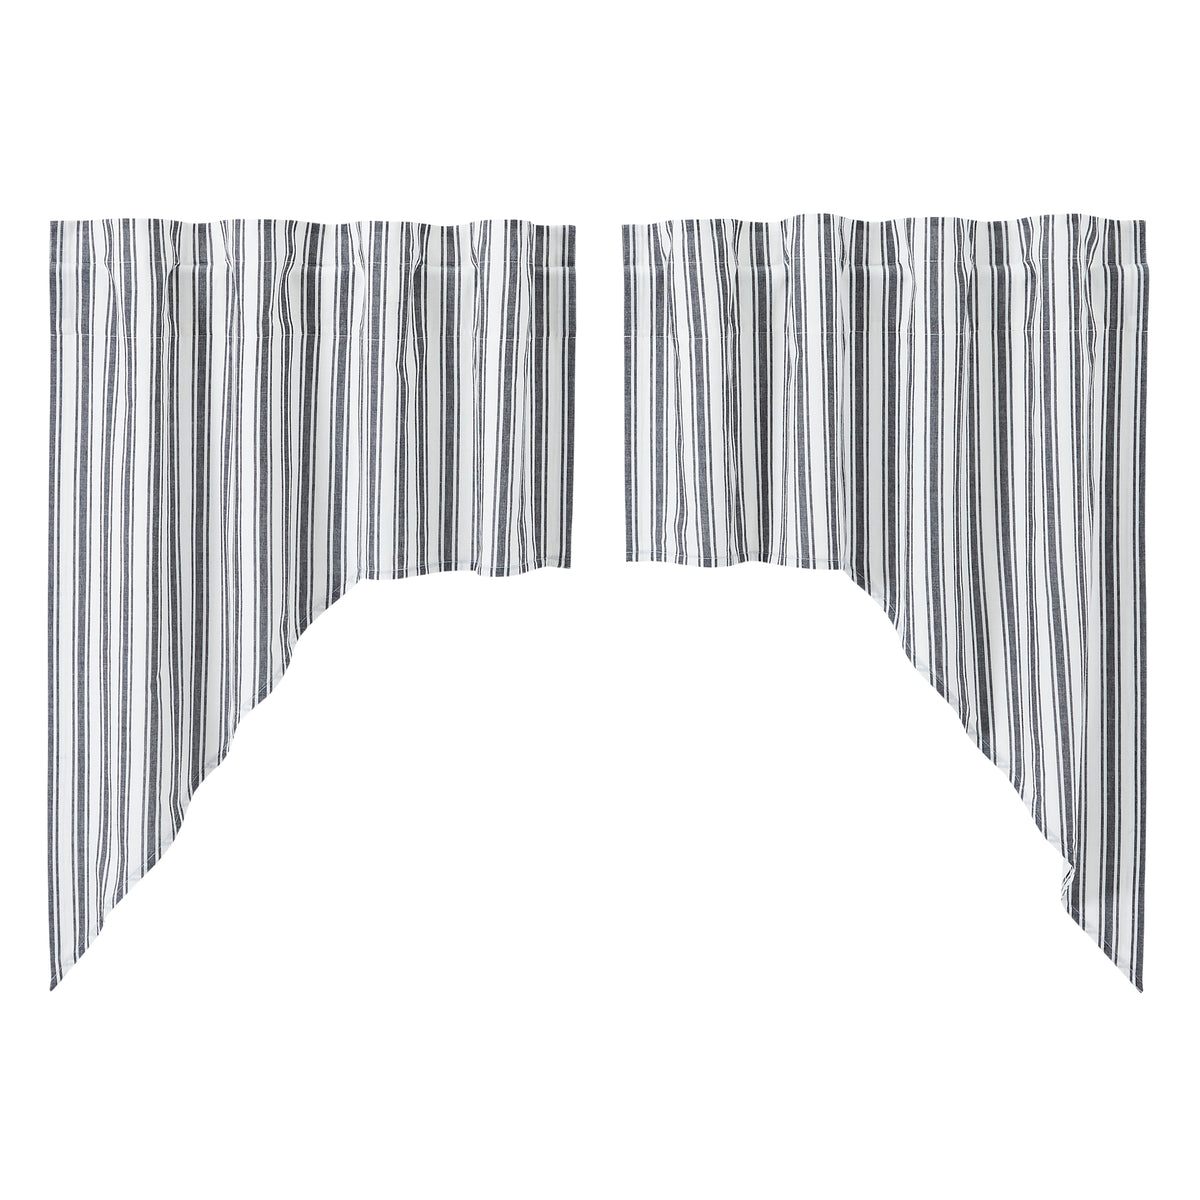 April & Olive Sawyer Mill Black Ticking Stripe Swag Set of 2 36x36x16 By VHC Brands